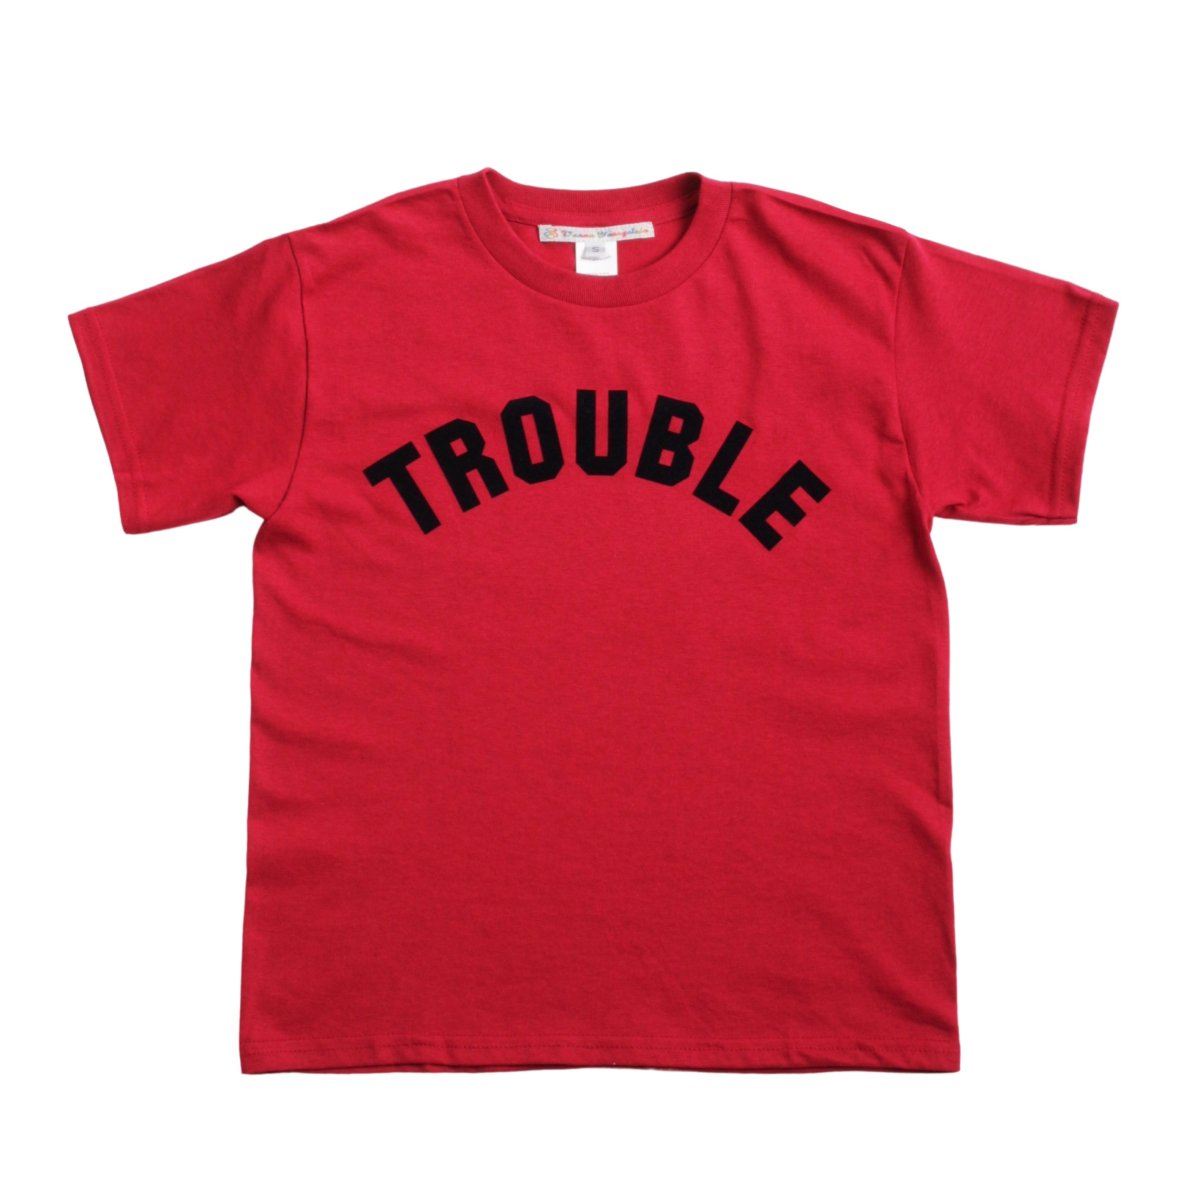 Trouble Tee【Burgundy】